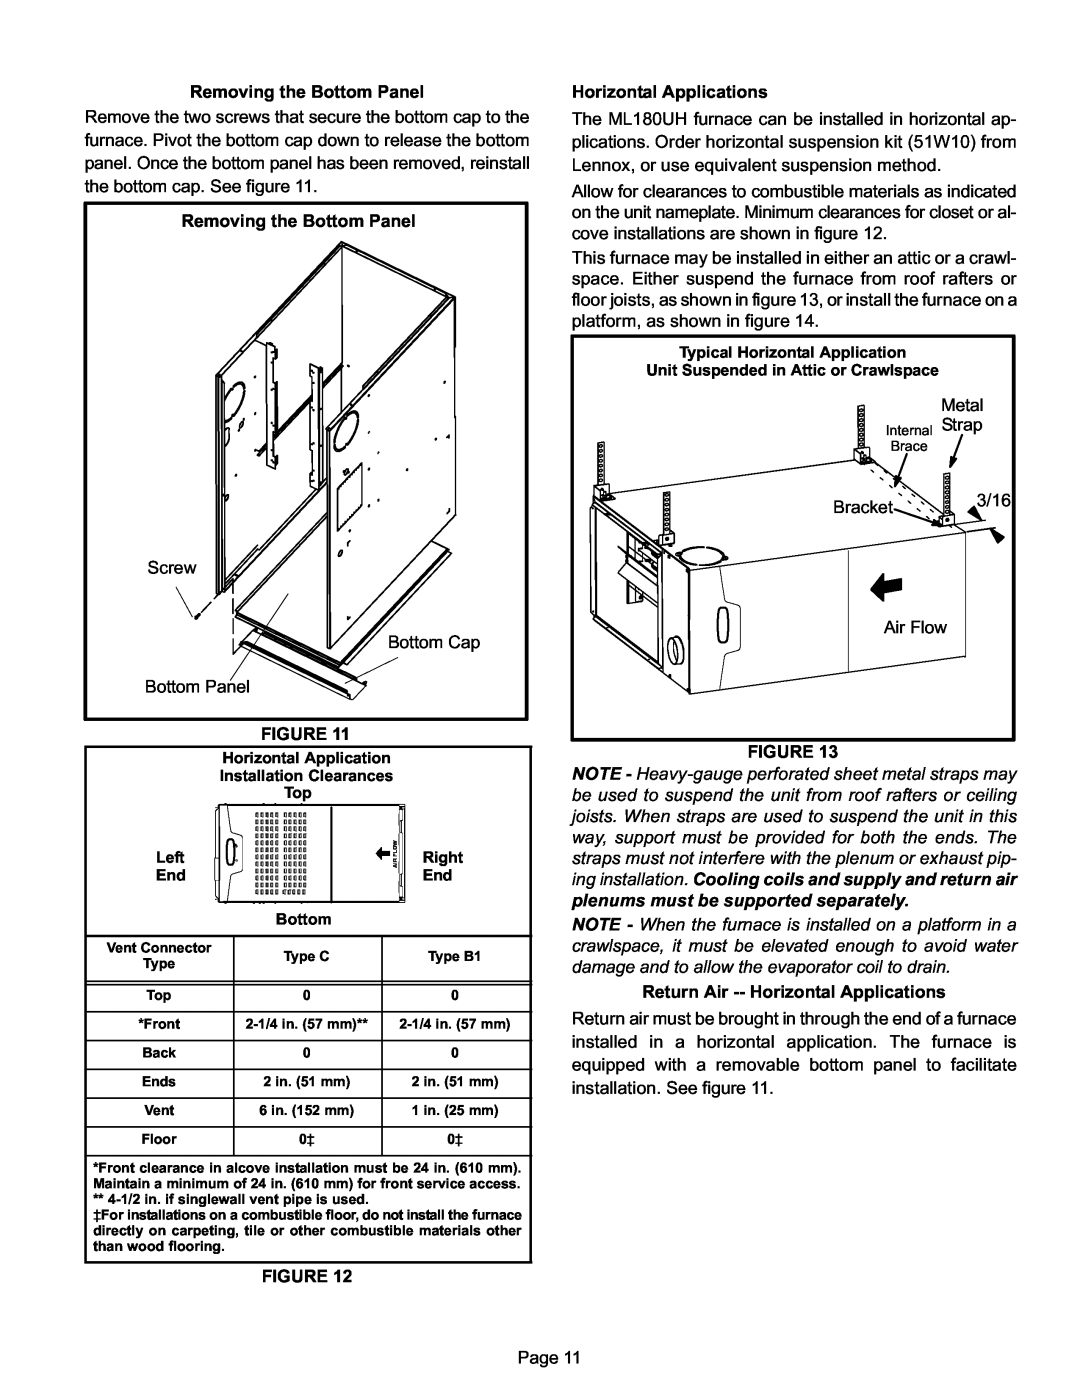 Lennox International Inc Merit Series Gas Furnace installation instructions Removing the Bottom Panel 